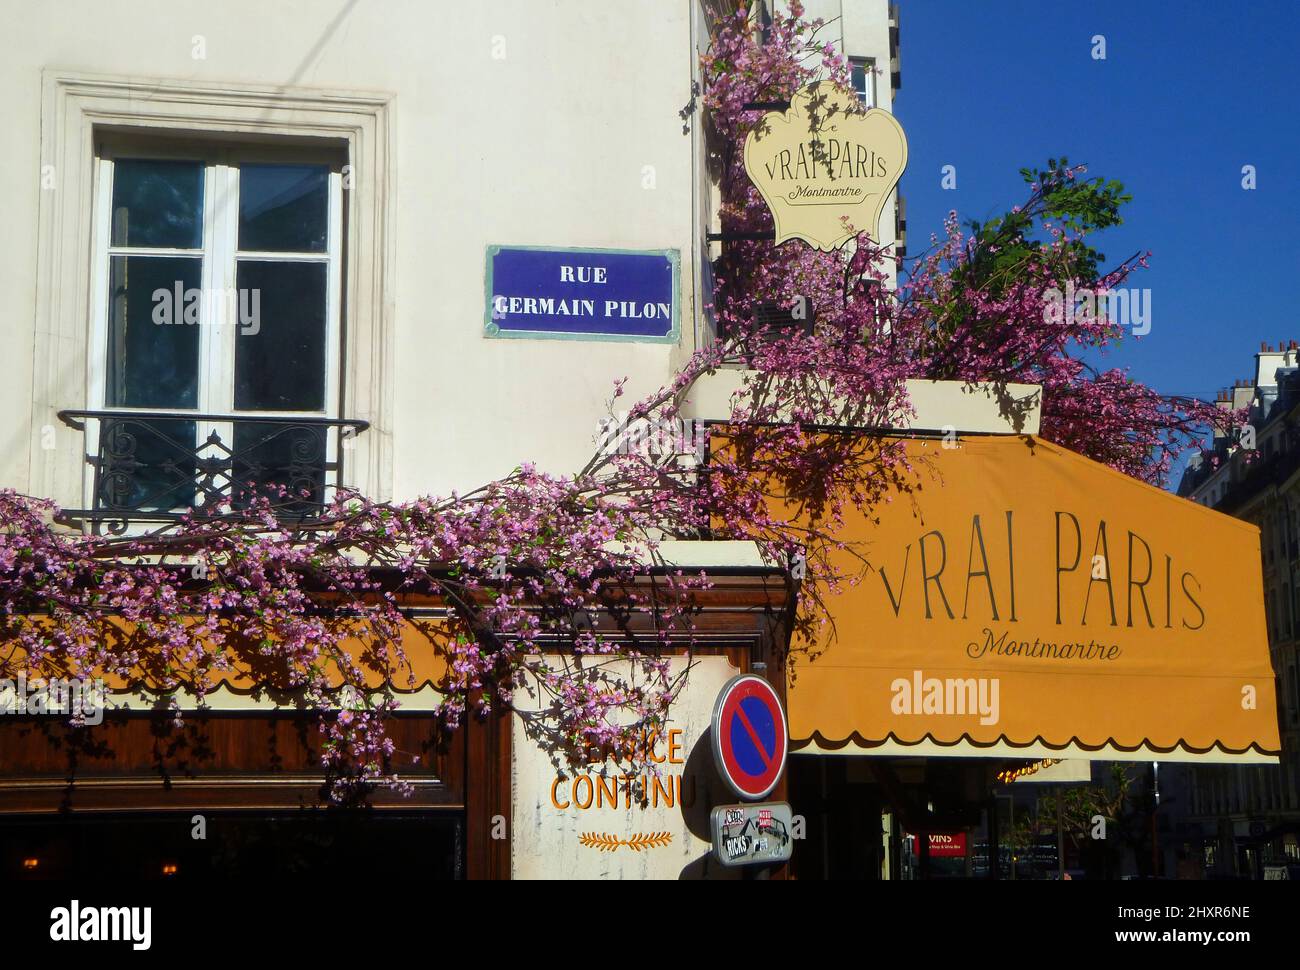 A colourful shot of Vrai Paris bistro on a street corner in Montmartre, Paris, France. Stock Photo